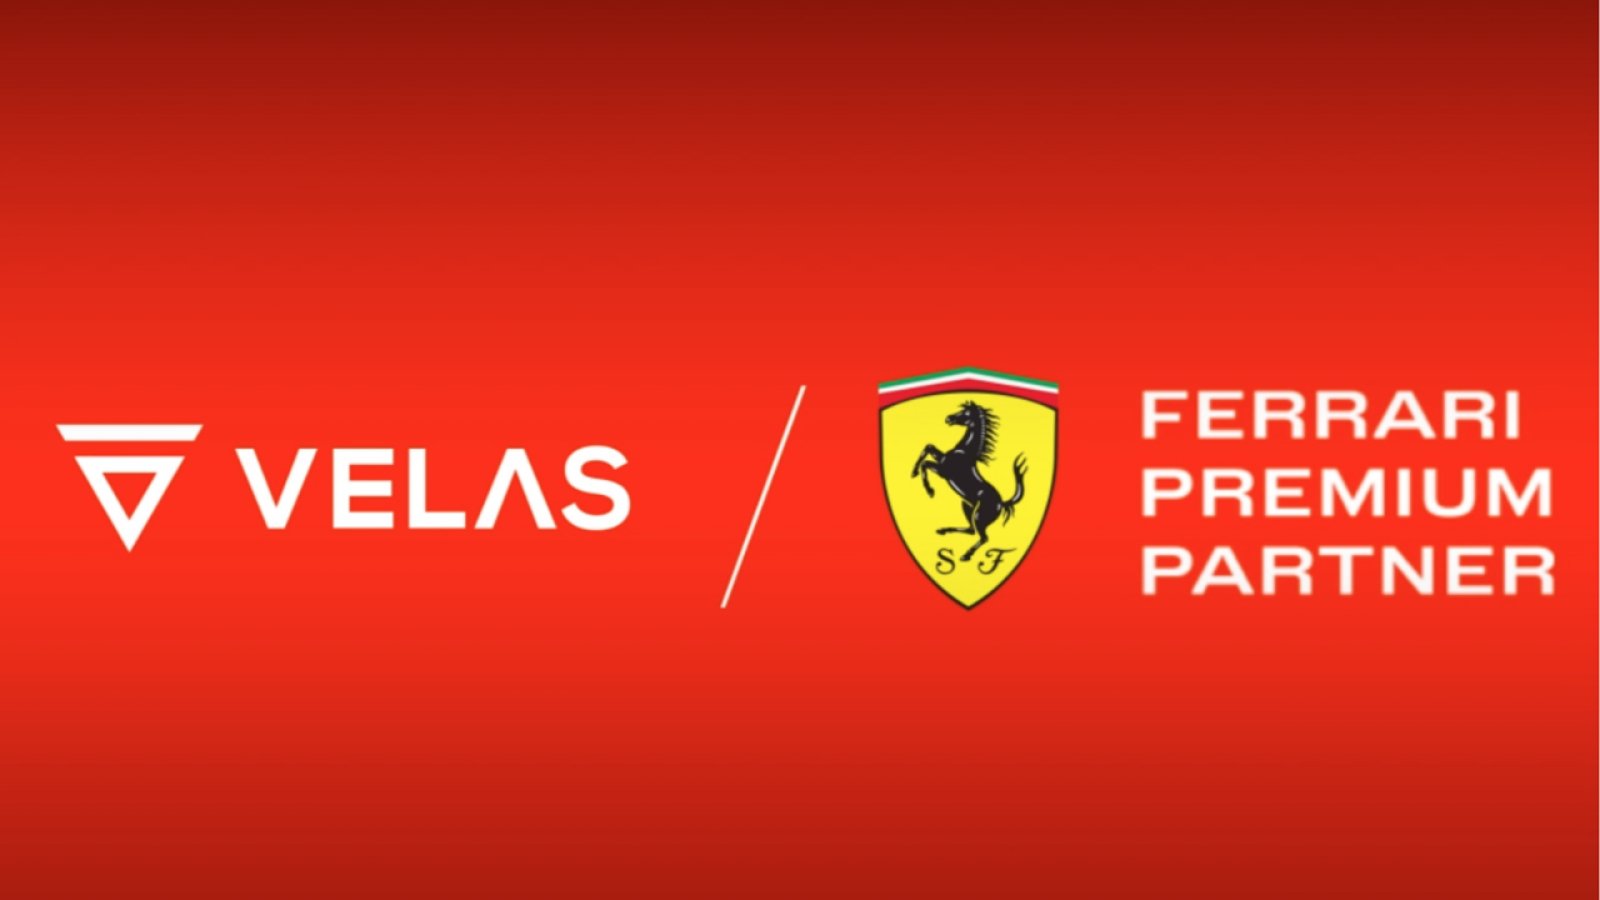 Velas Powers into Formula 1 with Multi-Year Scuderia Ferrari Partnership 